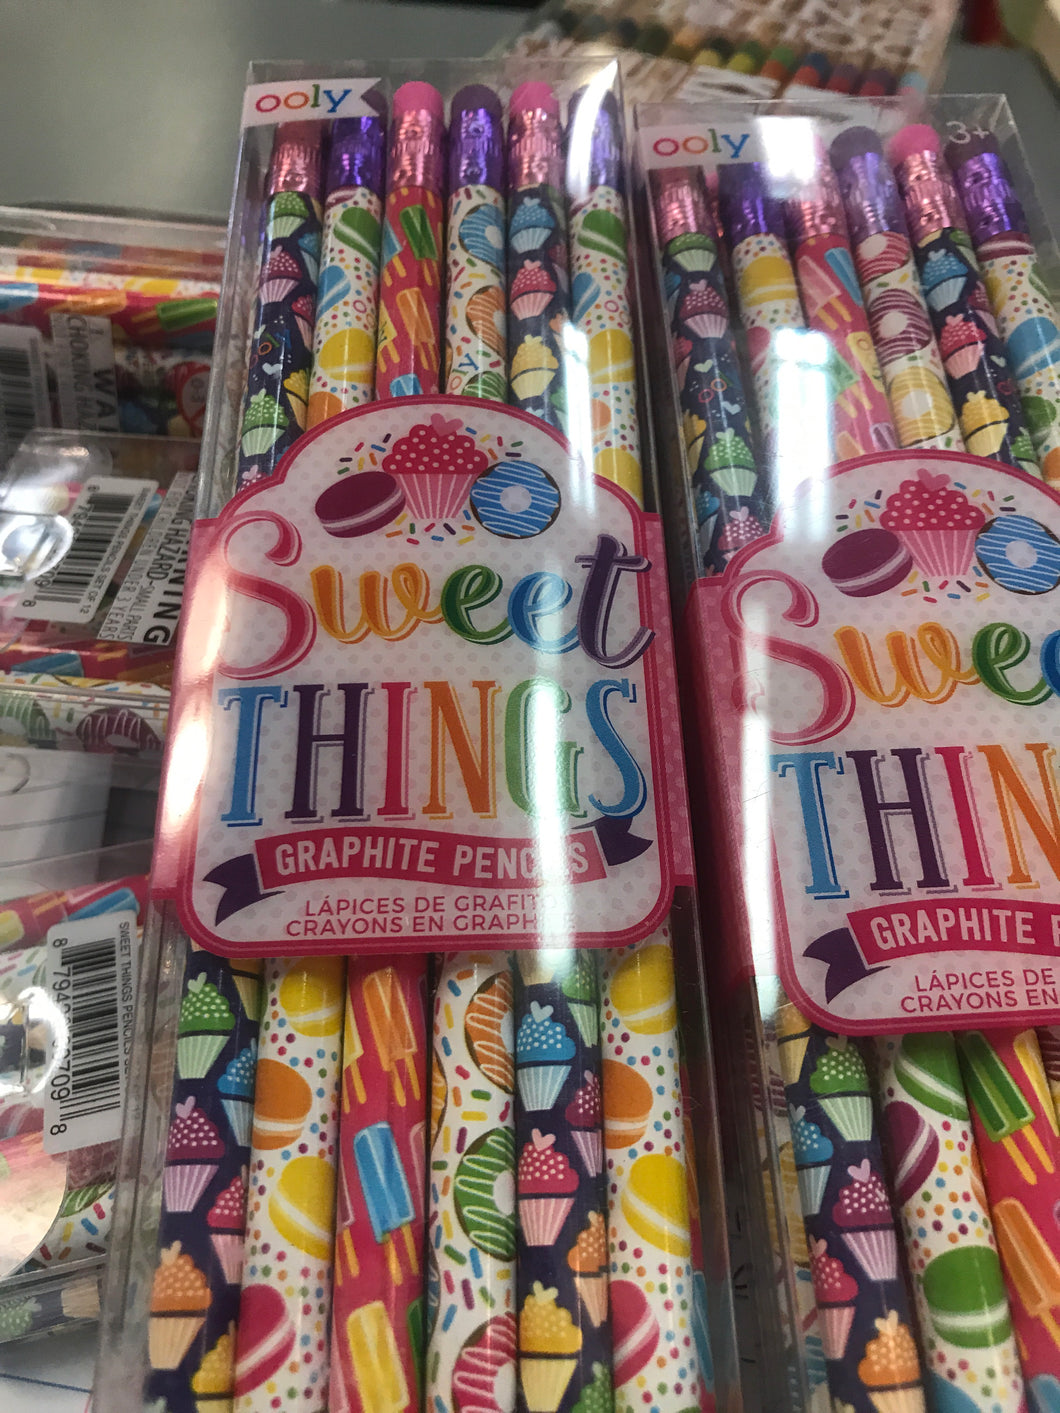 ooly - Sweet Things 12 Graphite Pencils